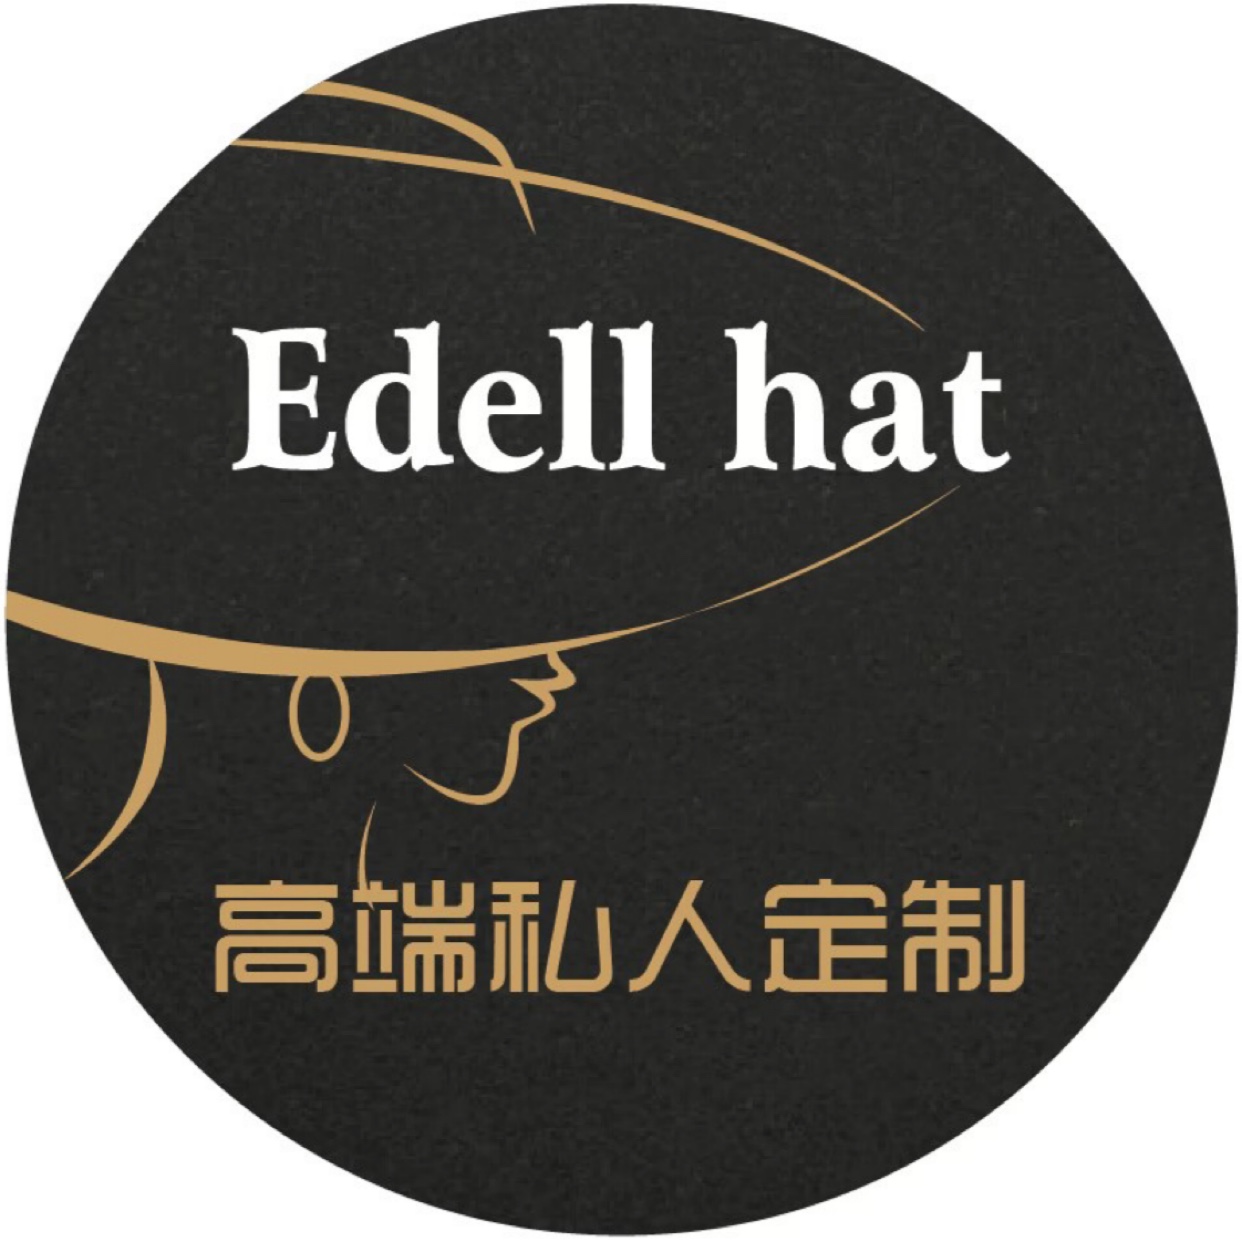  Edell hat爱戴家帽子